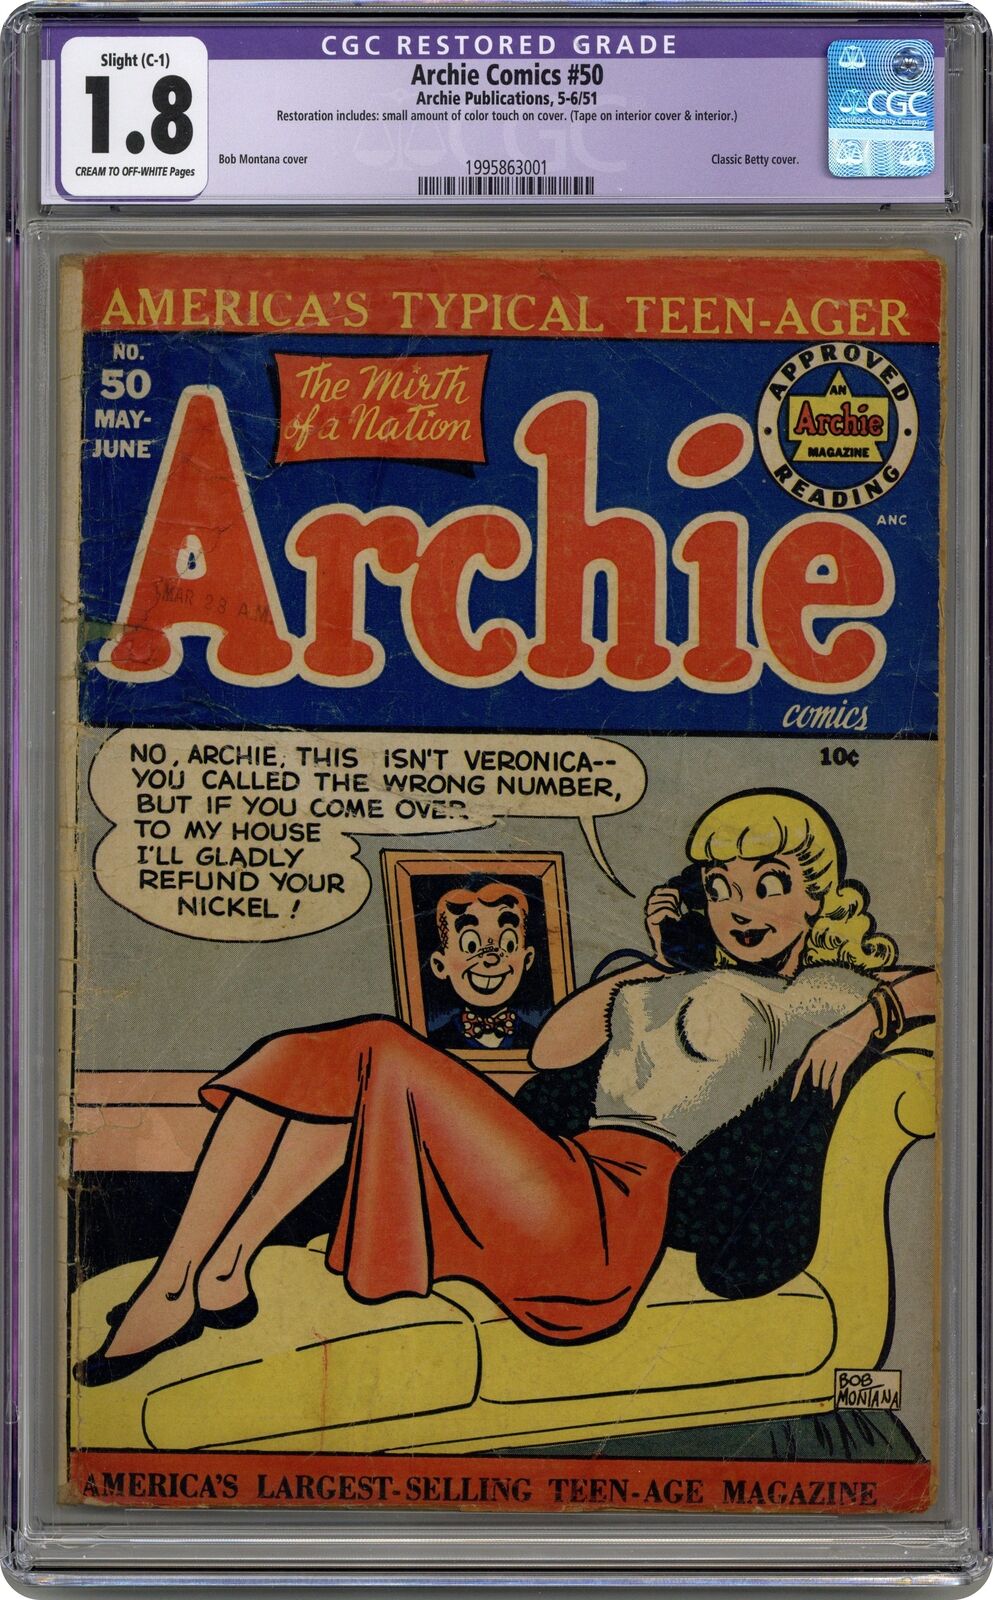 Archie #50 CGC 1.8 RESTORED 1951 1995863001